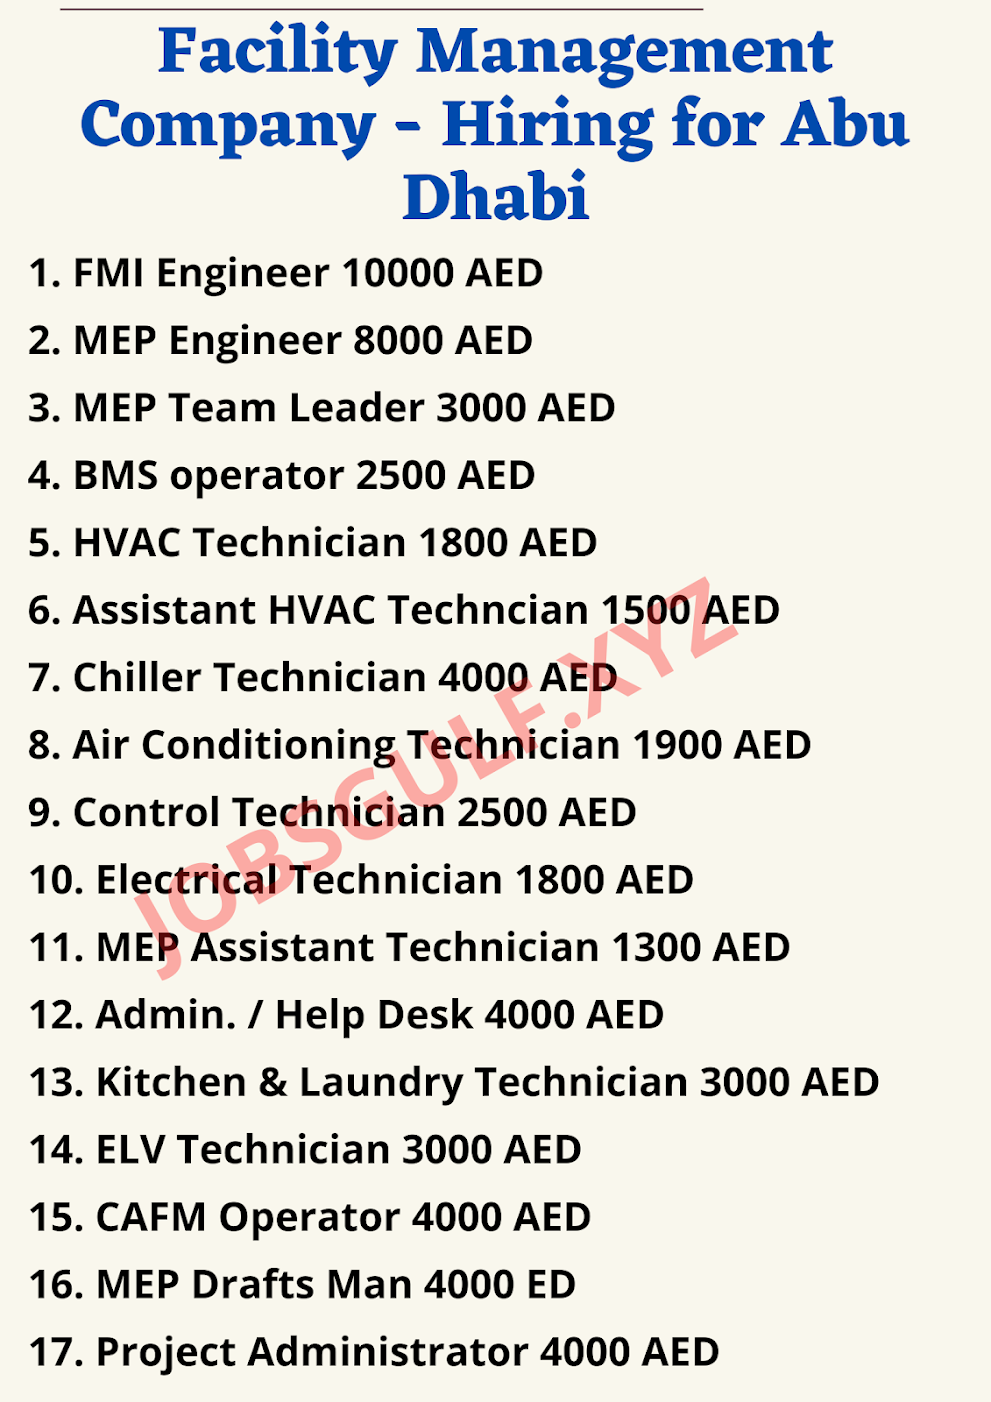 Facility Management Company - Hiring for Abu Dhabi